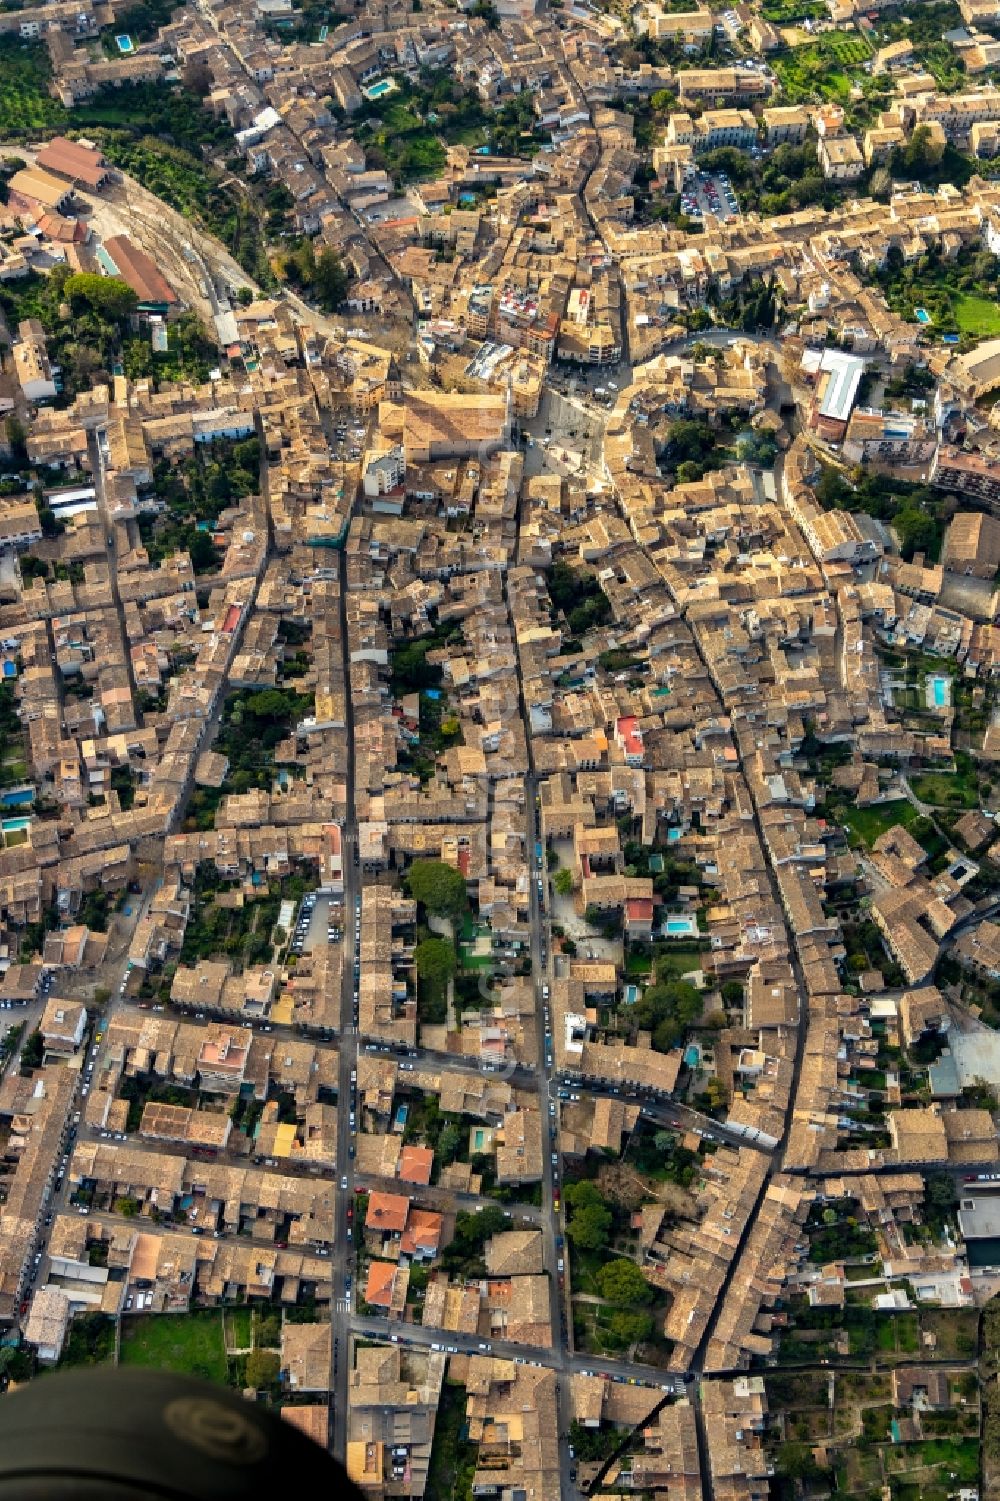 Aerial image Soller - City view on down town in Soller in Balearic Islands, Spain